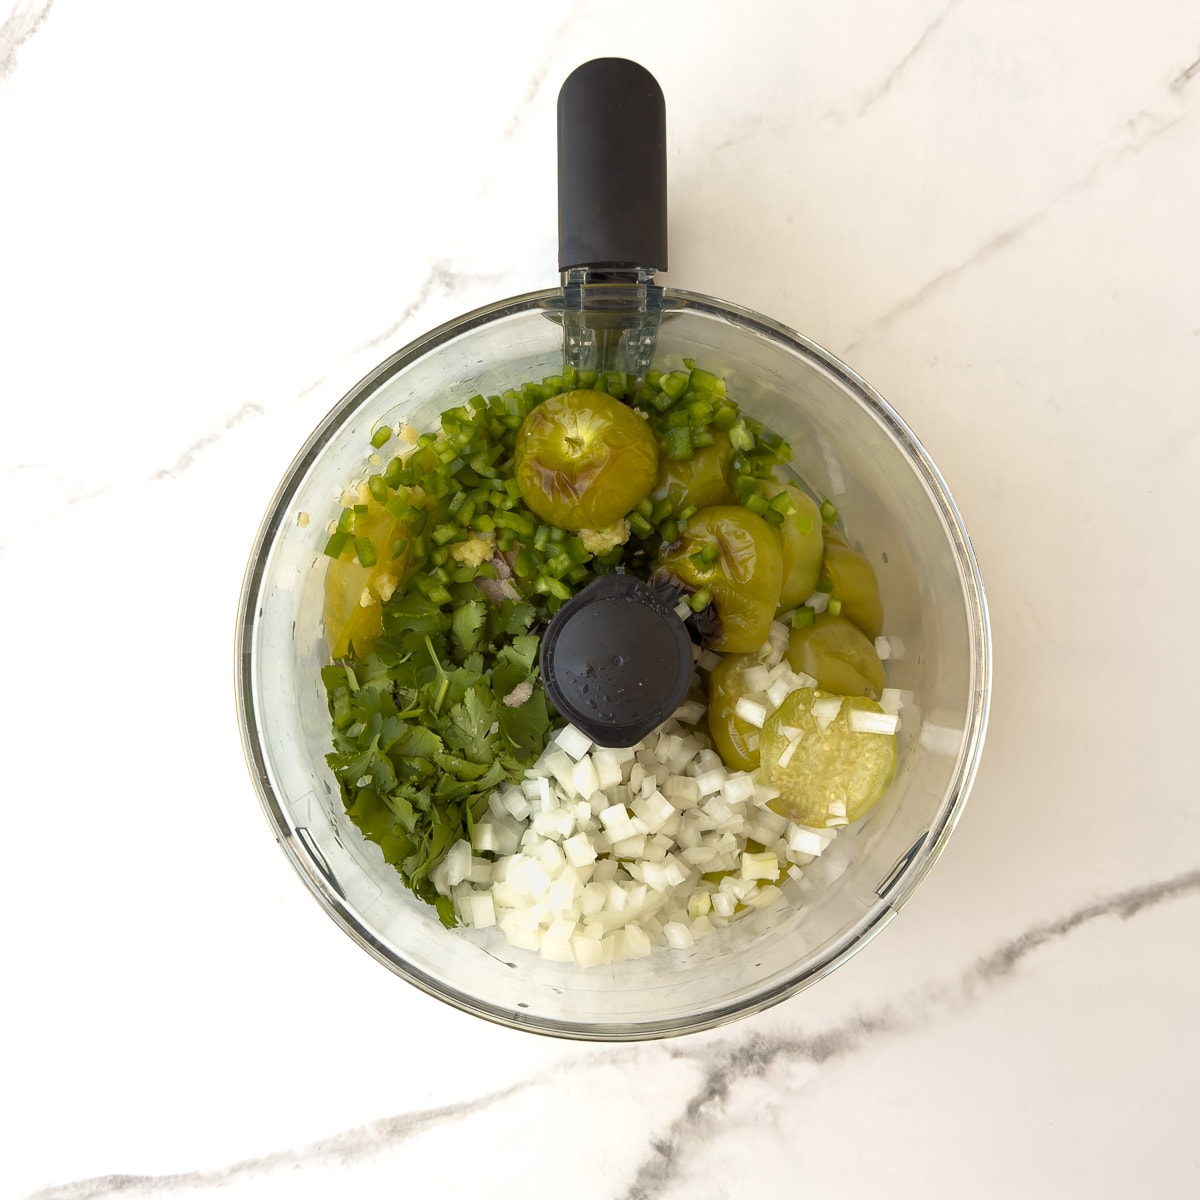 Ingredients for salsa verde in a food processor bowl.